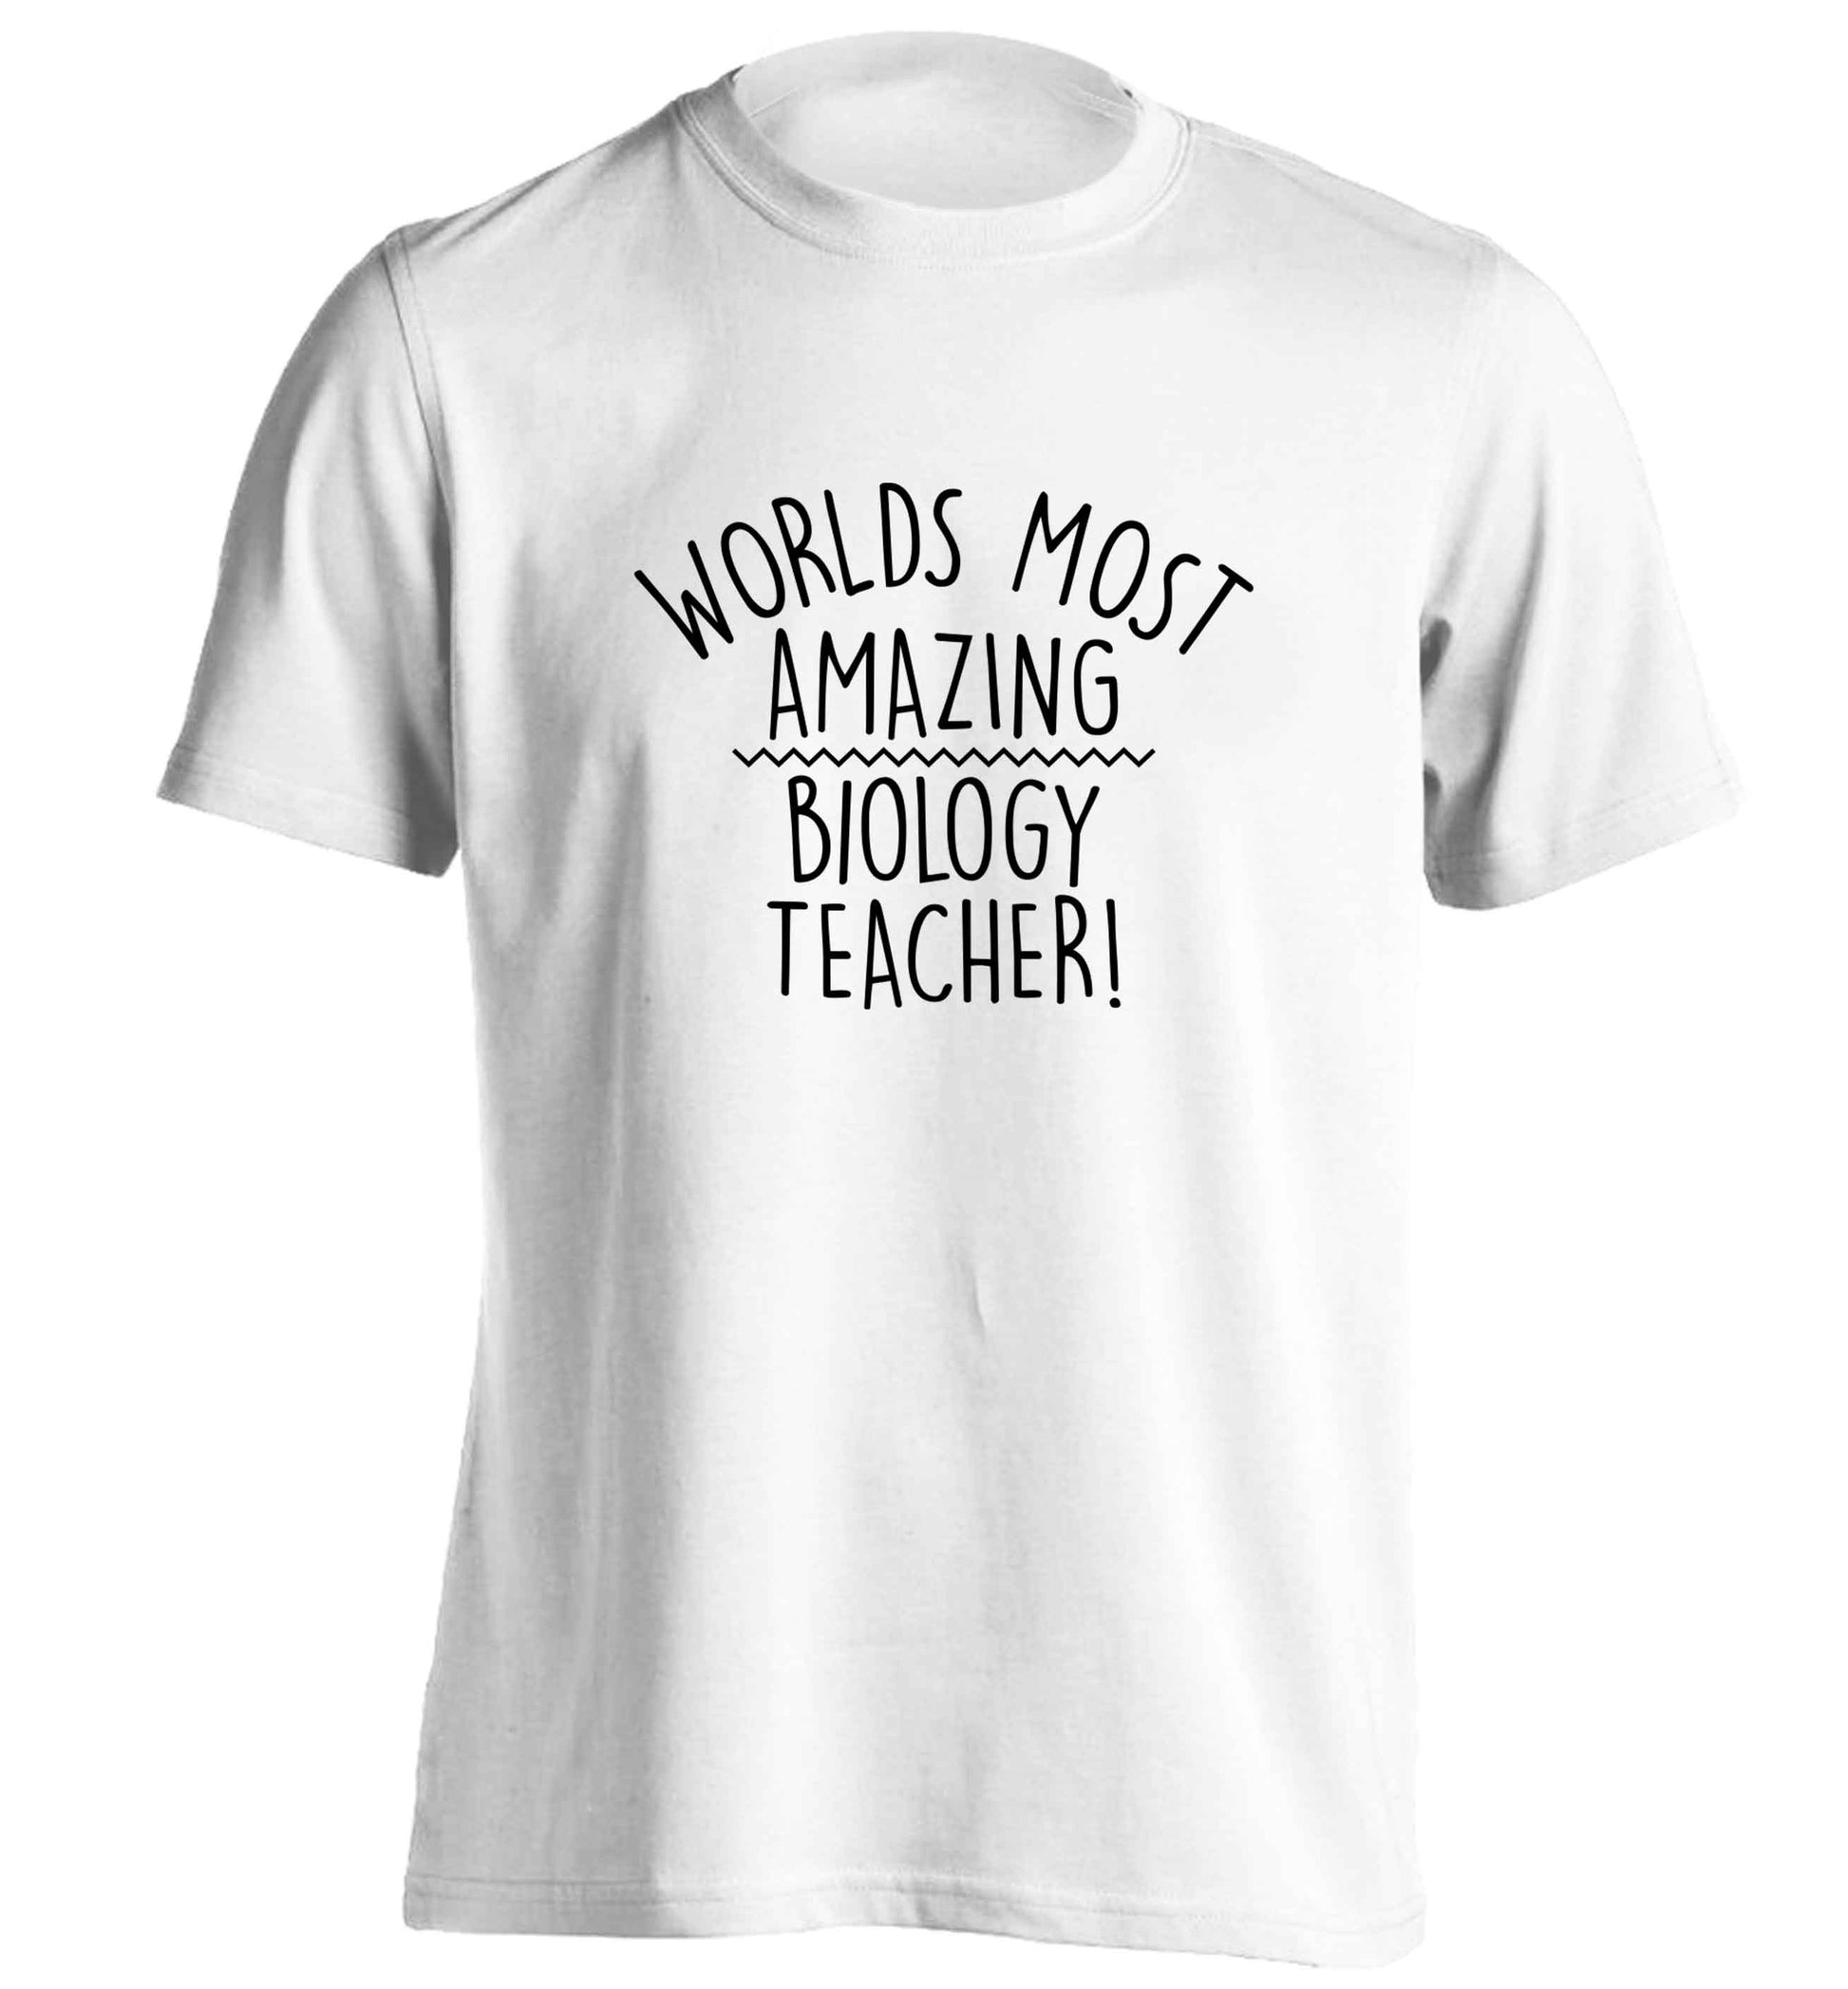 Worlds most amazing biology teacher adults unisex white Tshirt 2XL